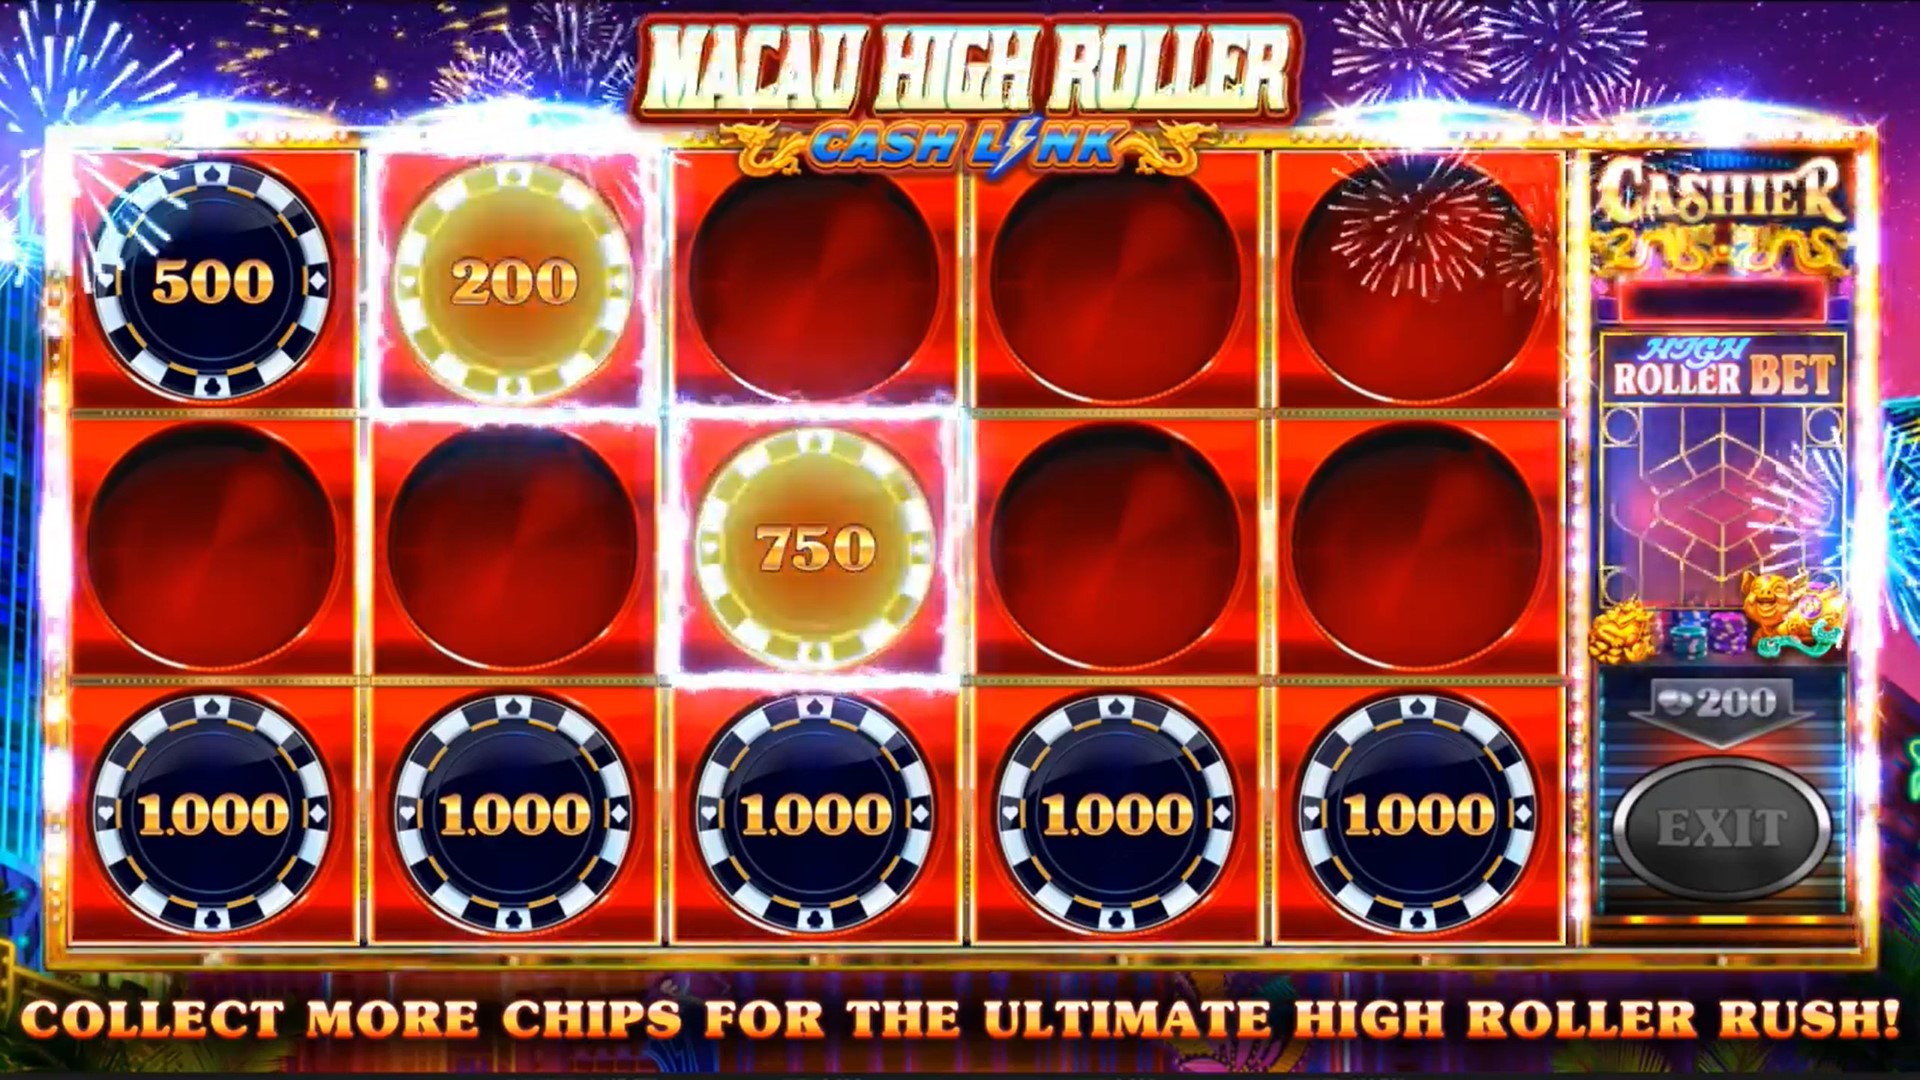 Macau High Roller high chip iSoftBet